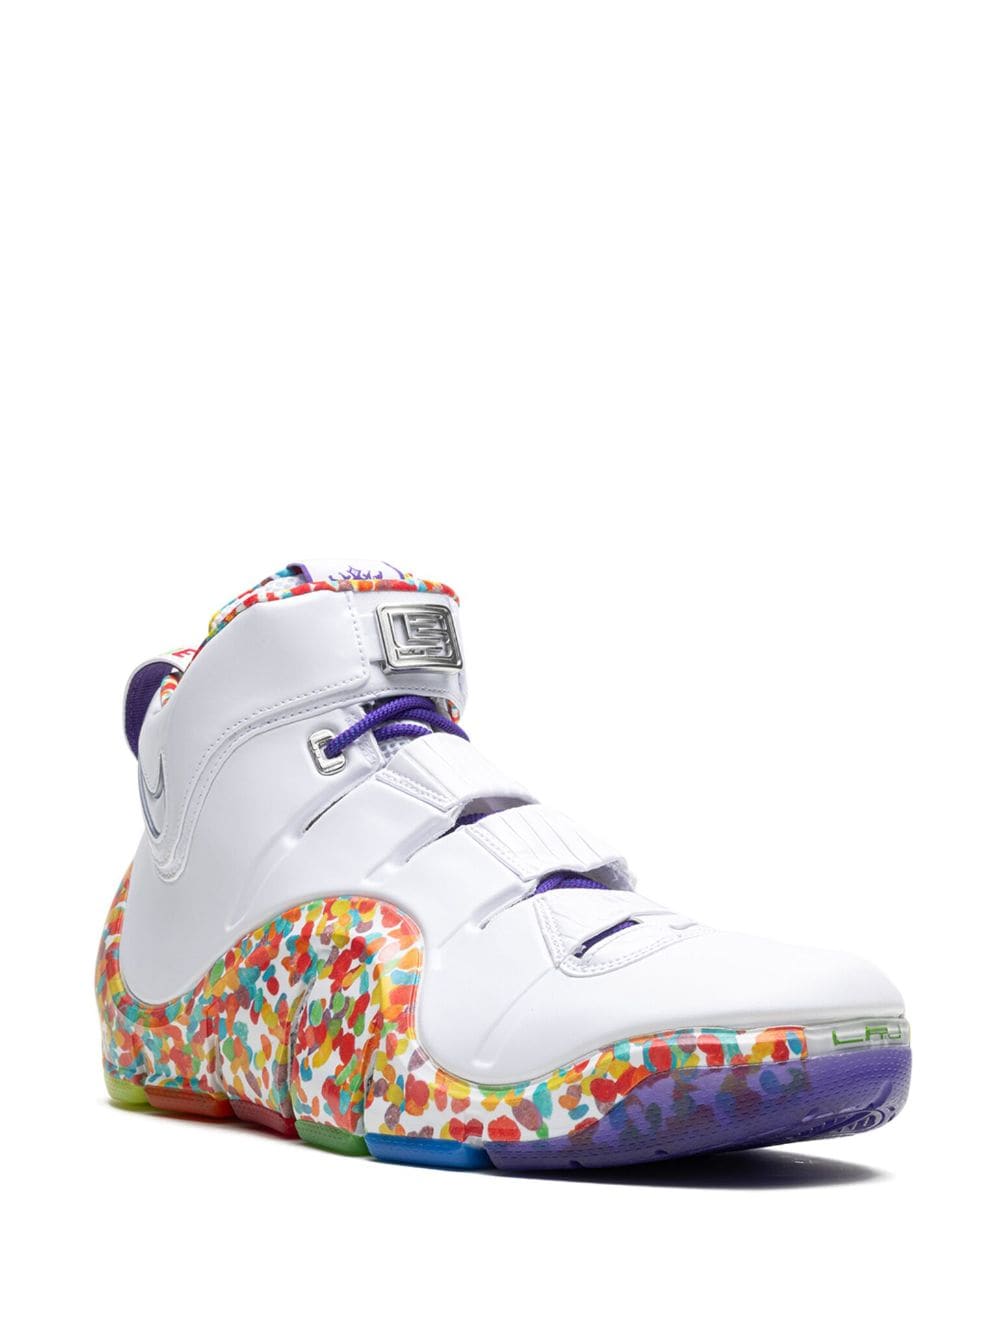 Image 2 of Nike LeBron 4 "Fruity Pebbles" sneakers